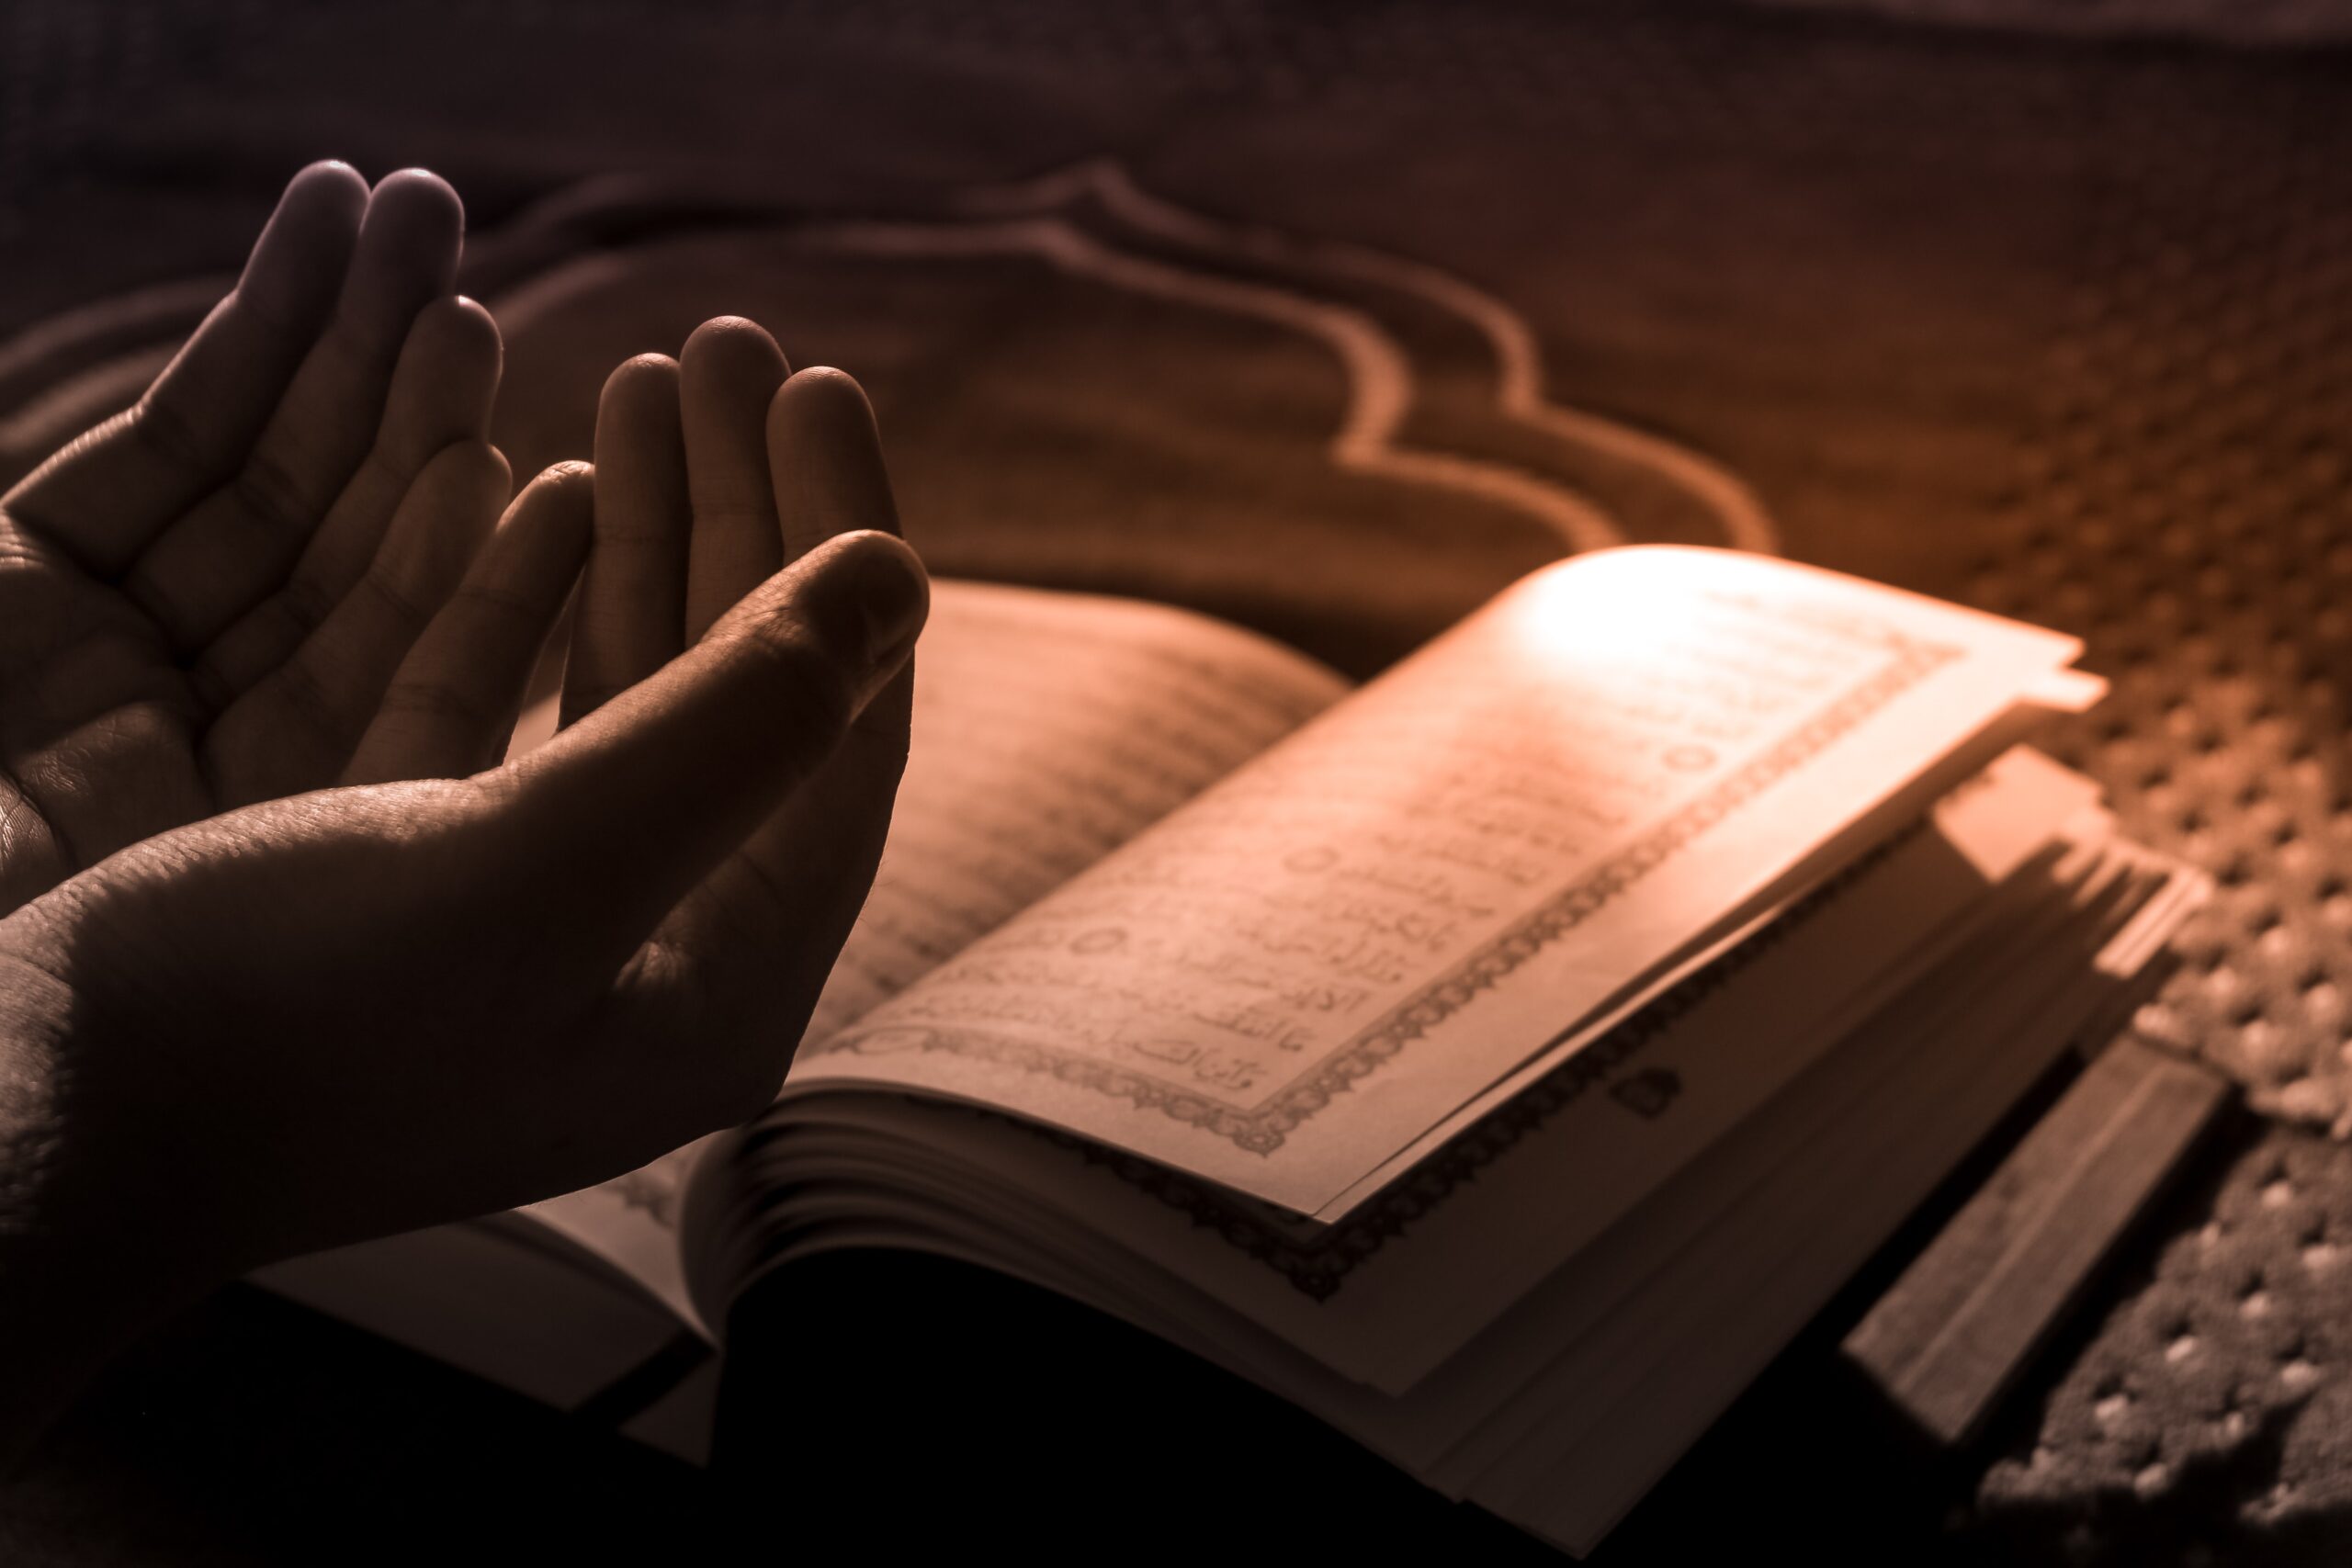 praying hands over a religious book, religion